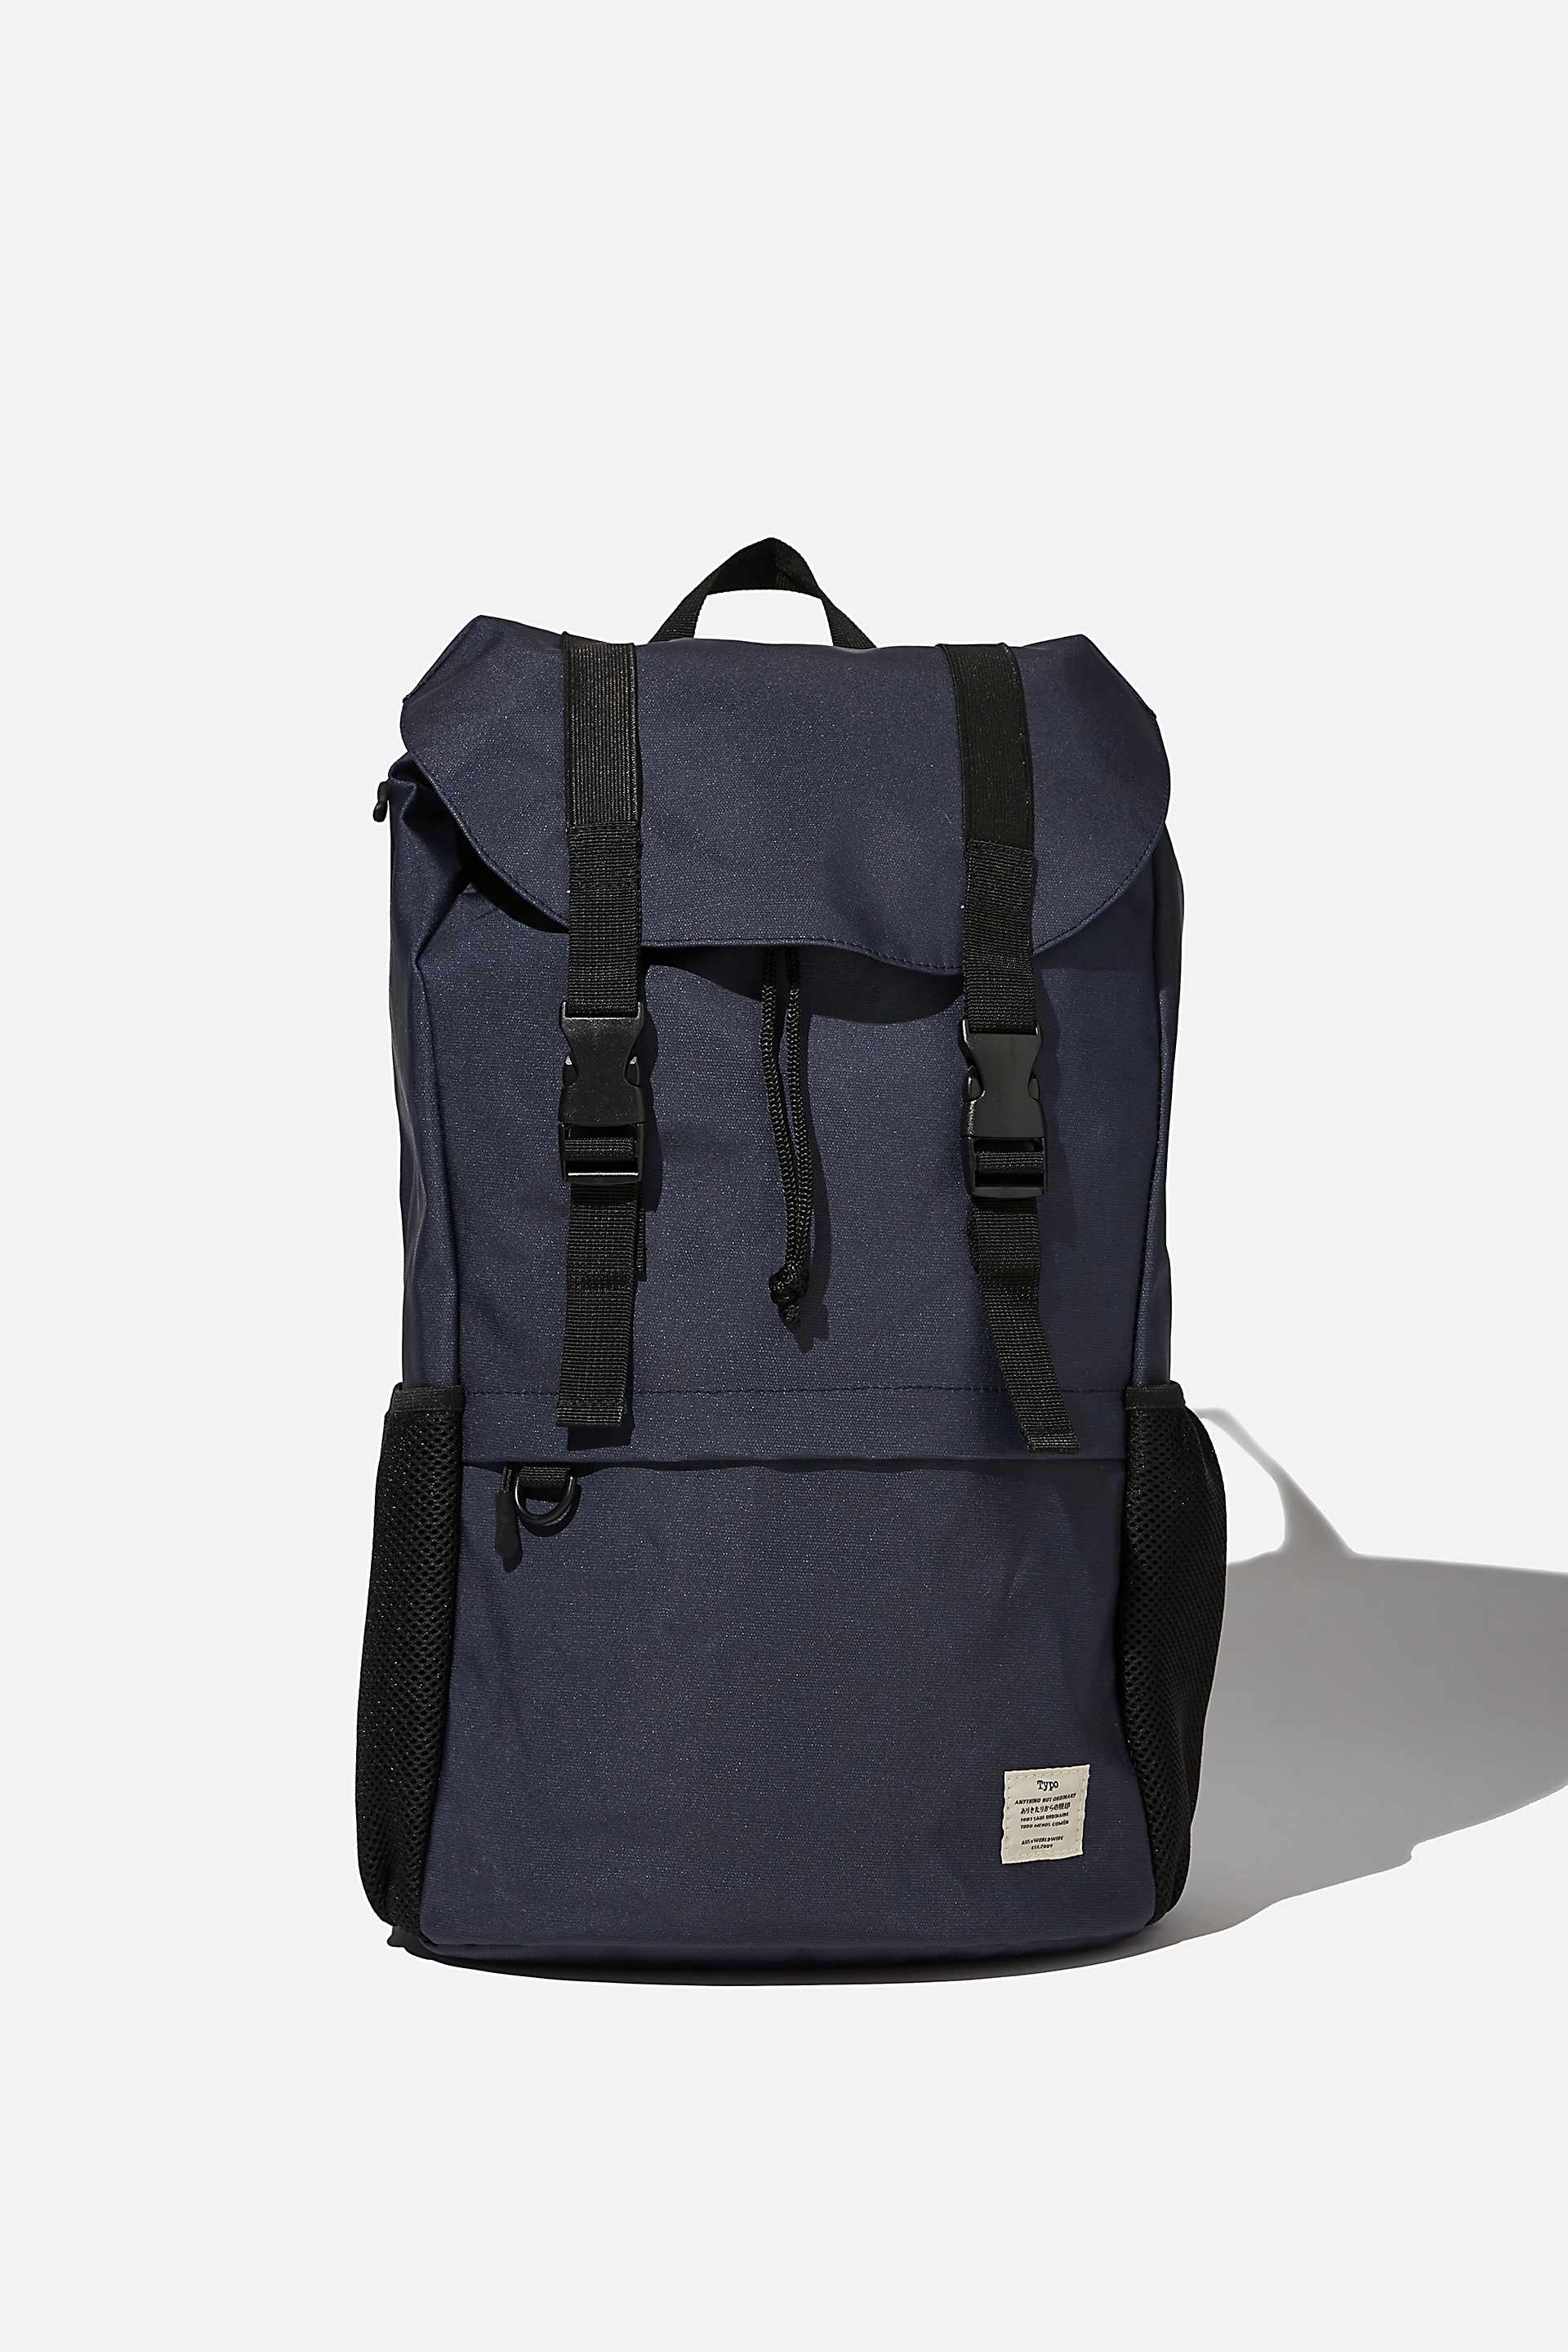 Typo - Explorer Backpack - Navy